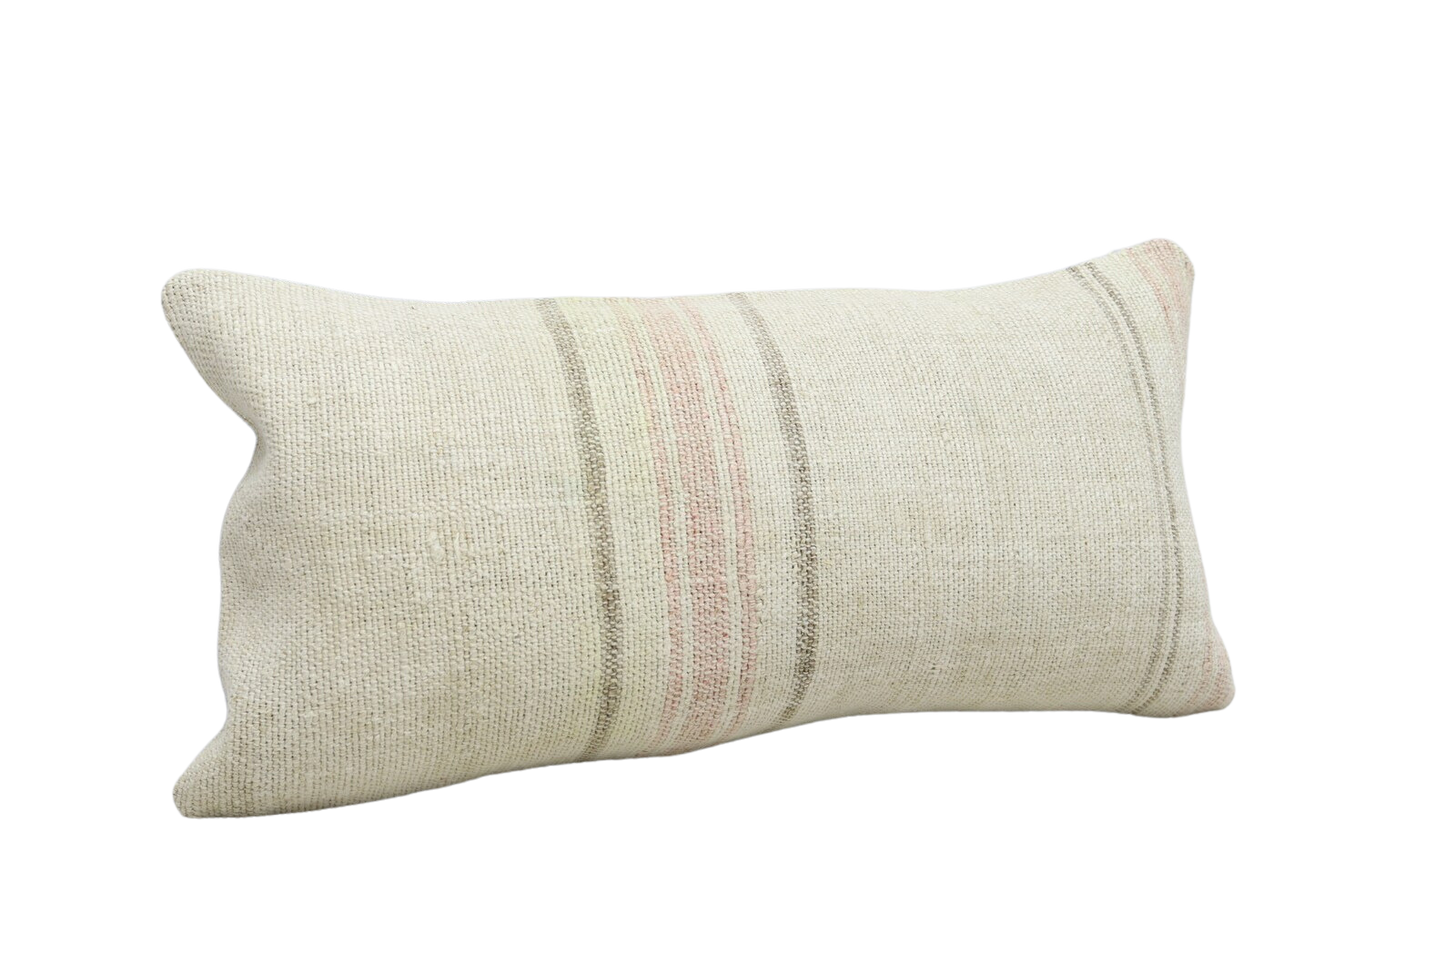 Tuscany 3.0 Vintage Pillow